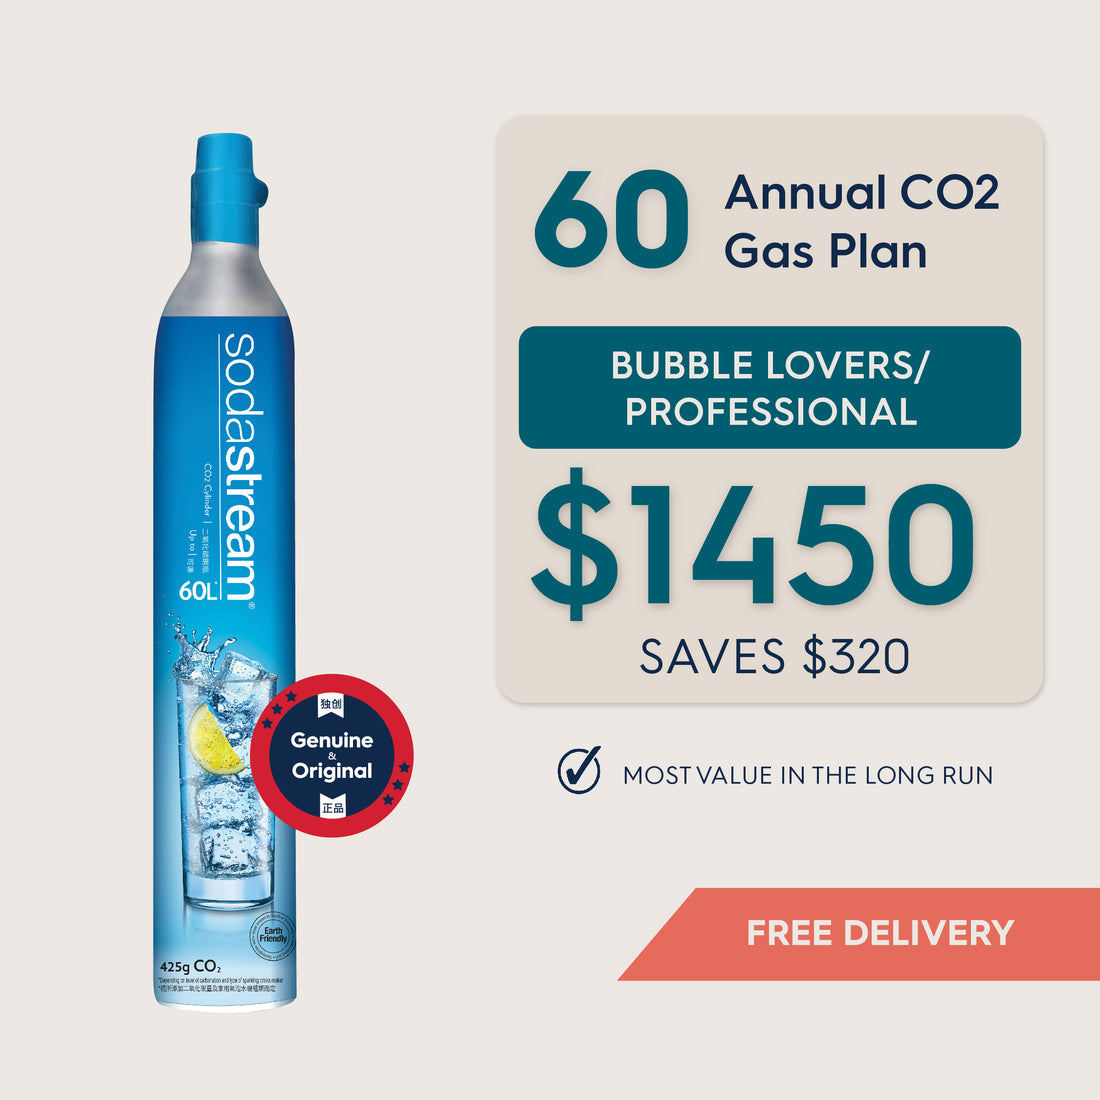 SodaStream 60 CO2 Gas Cylinder Annual Saver Plan - Savings $320